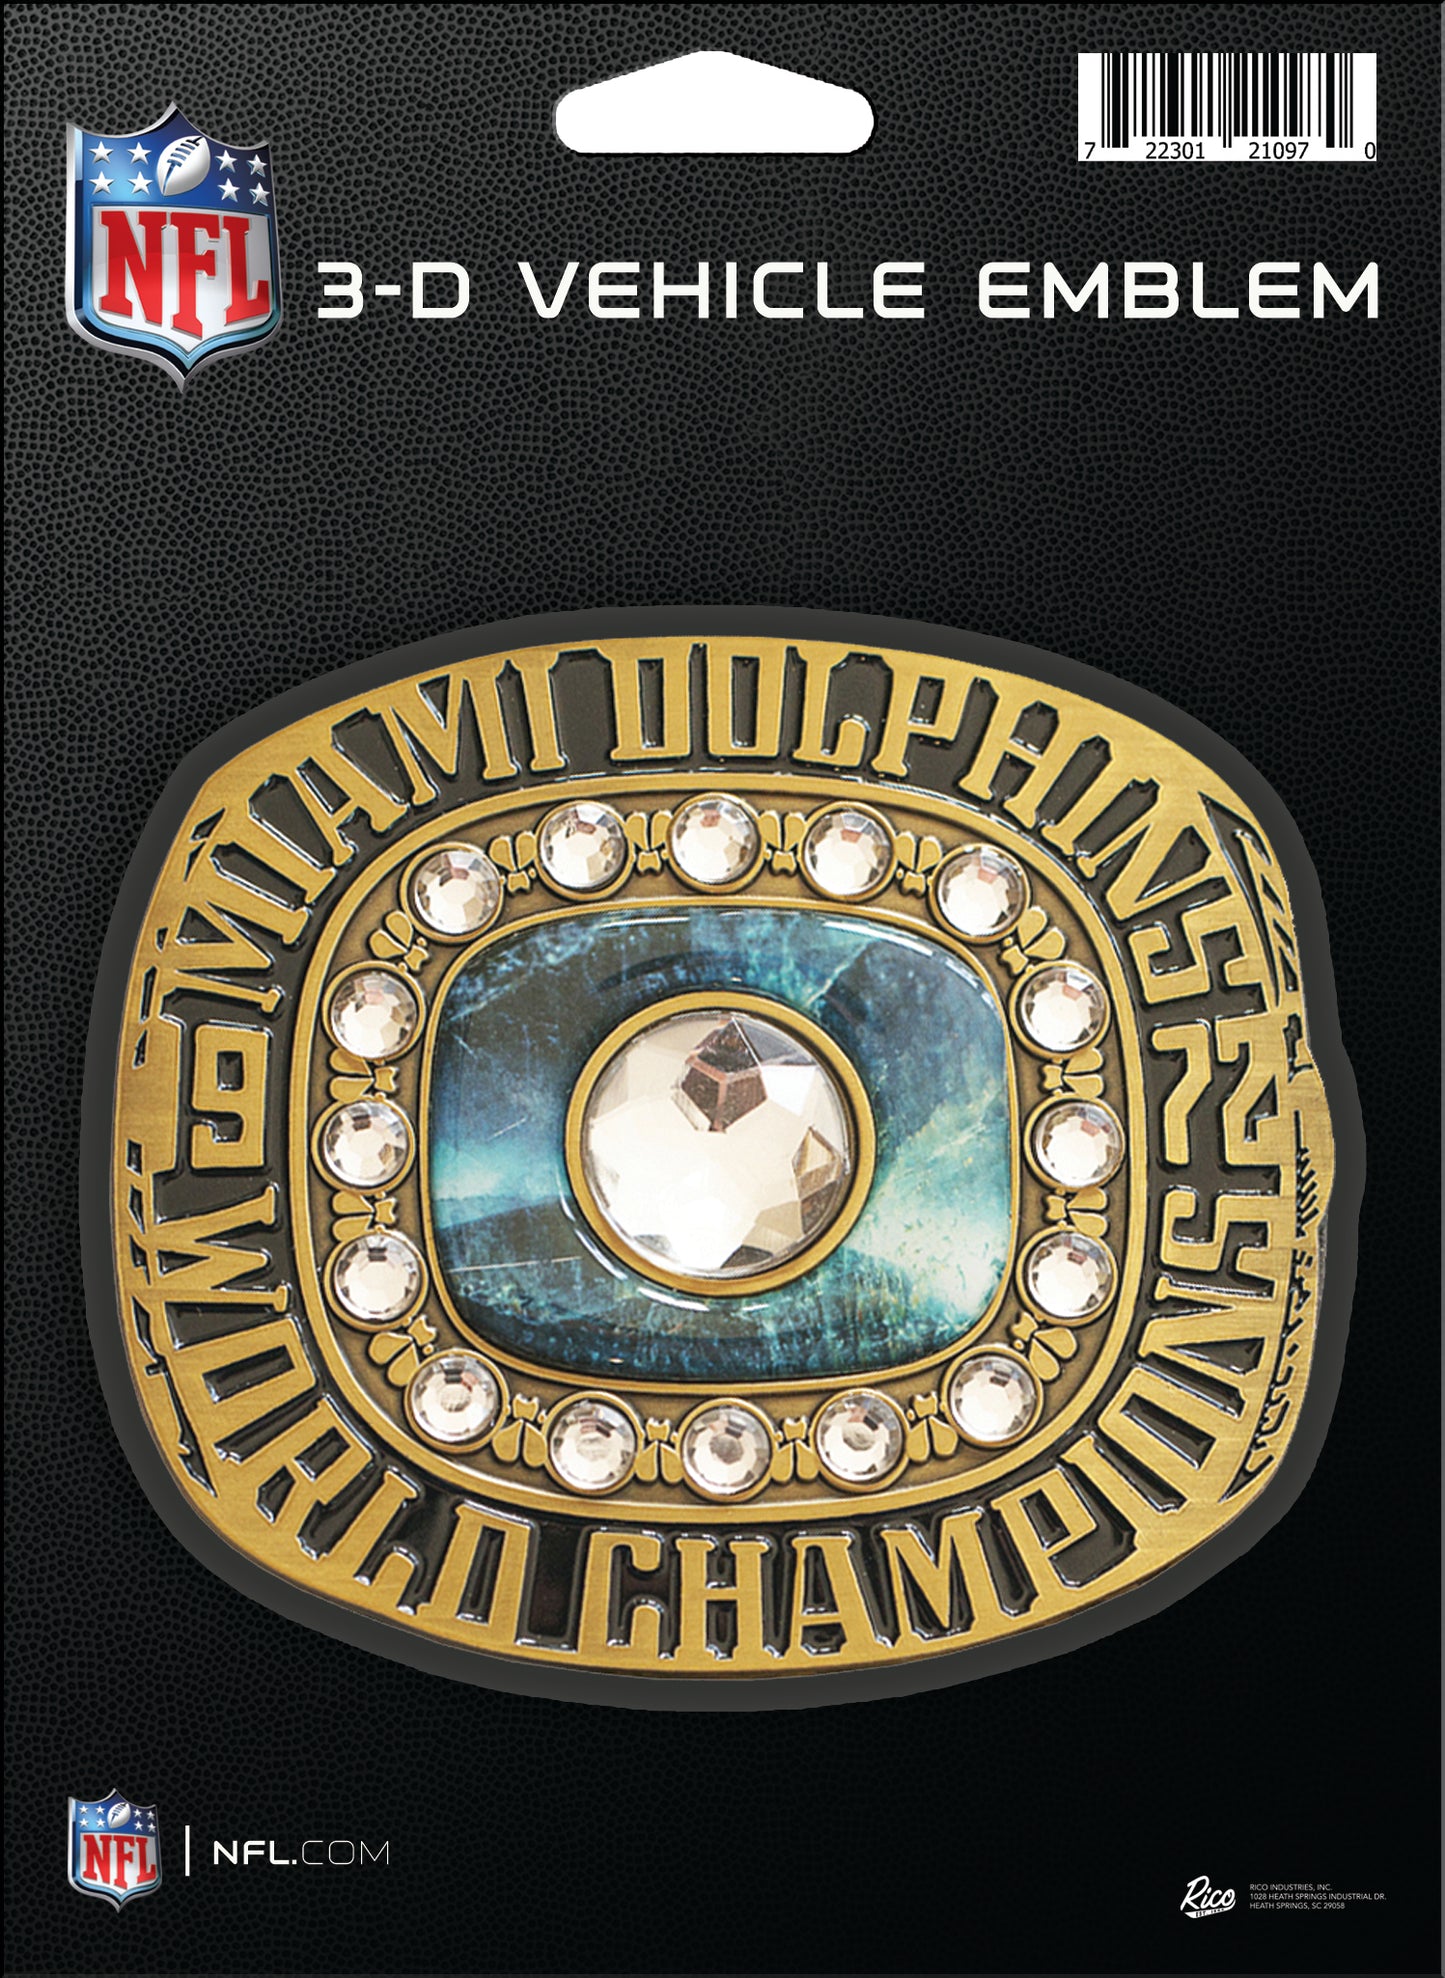 Miami Dolphins SB VII Championship Ring Vehicle Emblem – Bling Badge